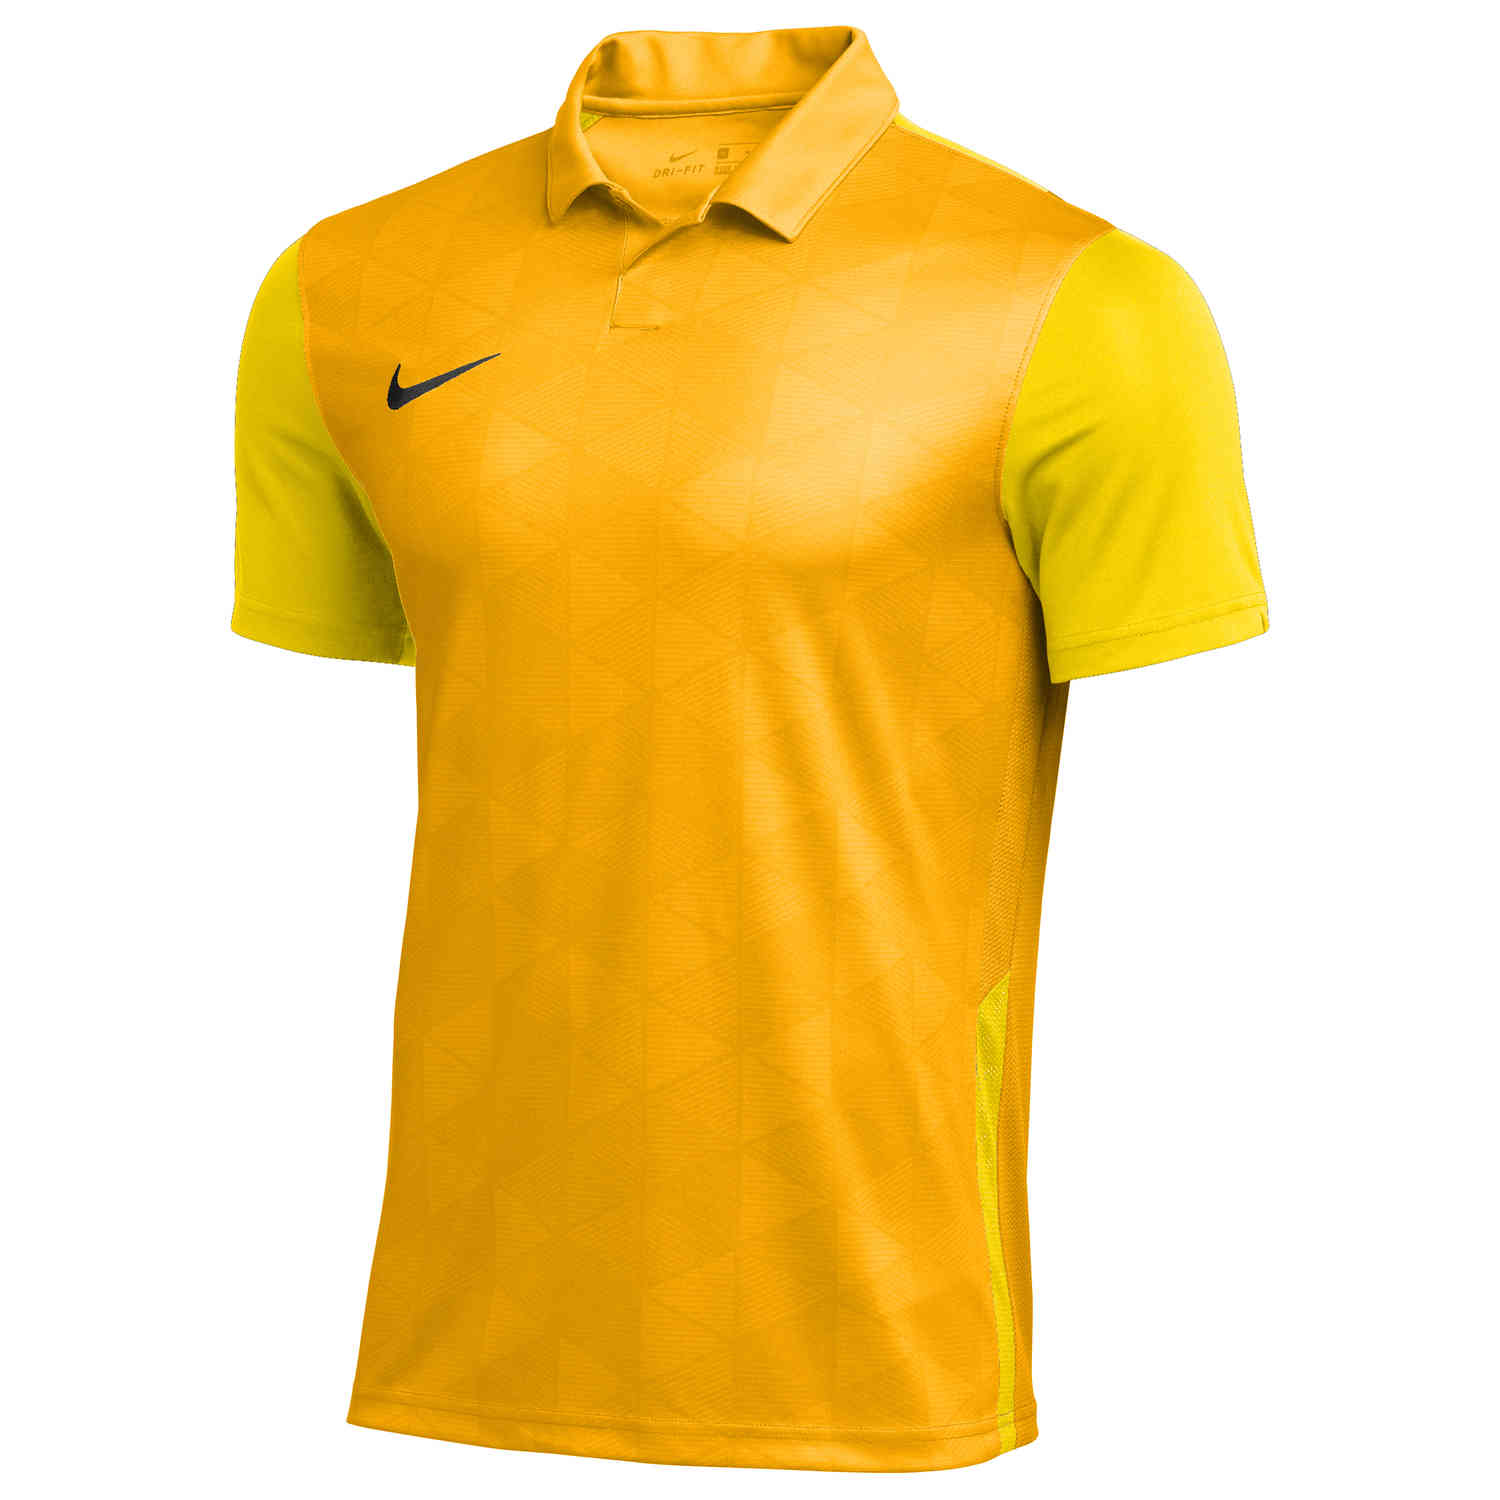 Nike Trophy IV Jersey - University Gold/Tour Yellow - SoccerPro